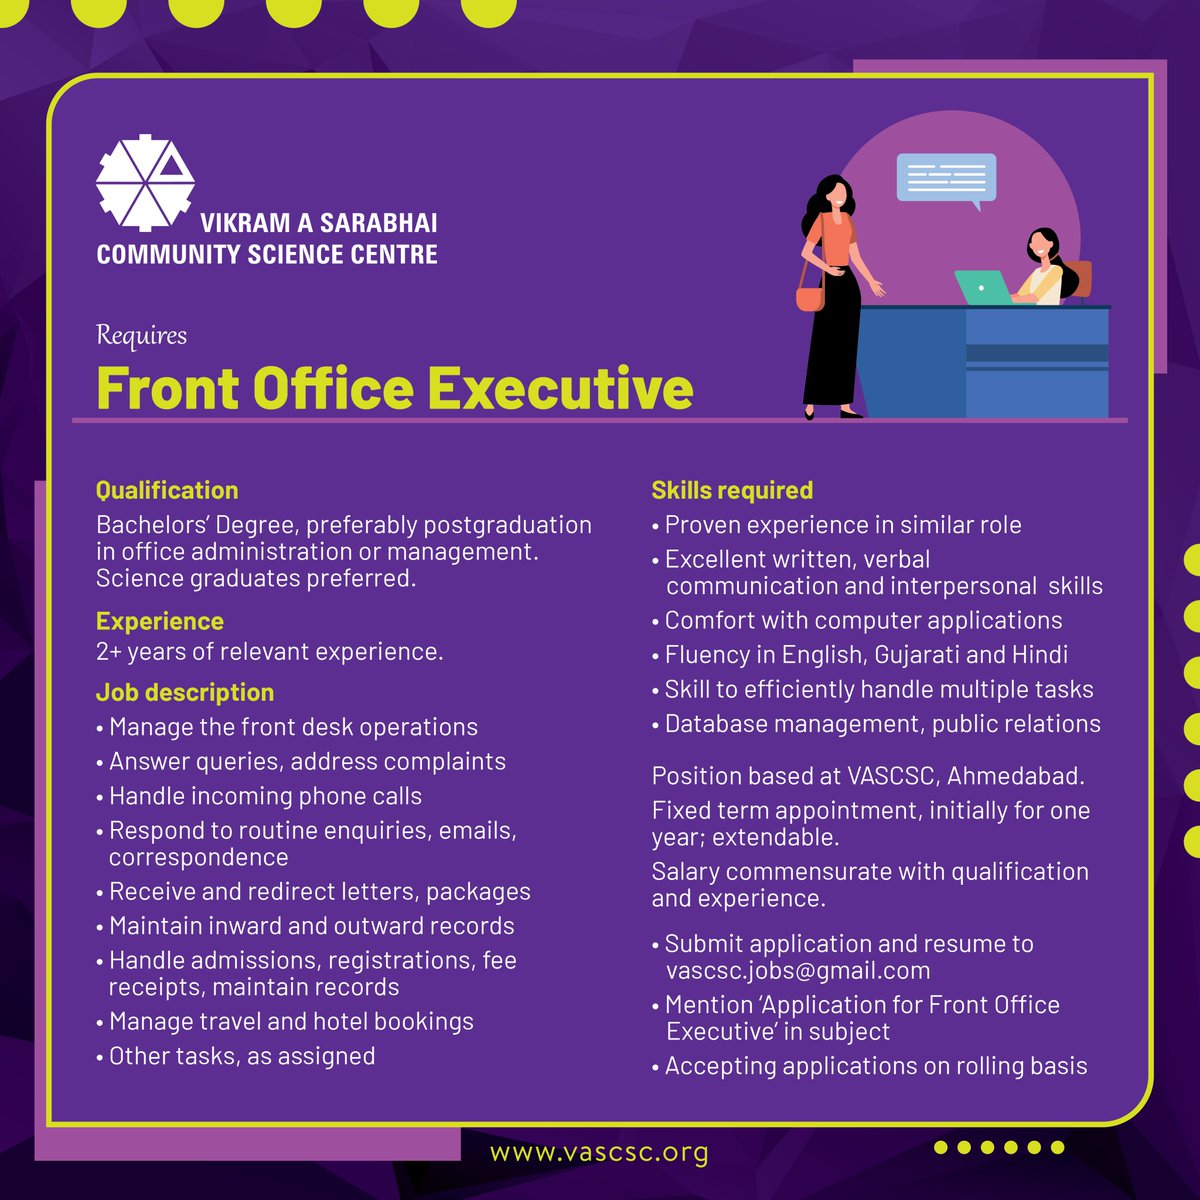 VASCSC is hiring Front Office Executive. Apply now!

#post #FrontOffice #executive #management #jobs2022 #jobsearch #jobseekers #incharge #jobsindia #naukri #ahmedabadjobs #jobs #hiring #hiringnow #hiring2023 #stemeducation